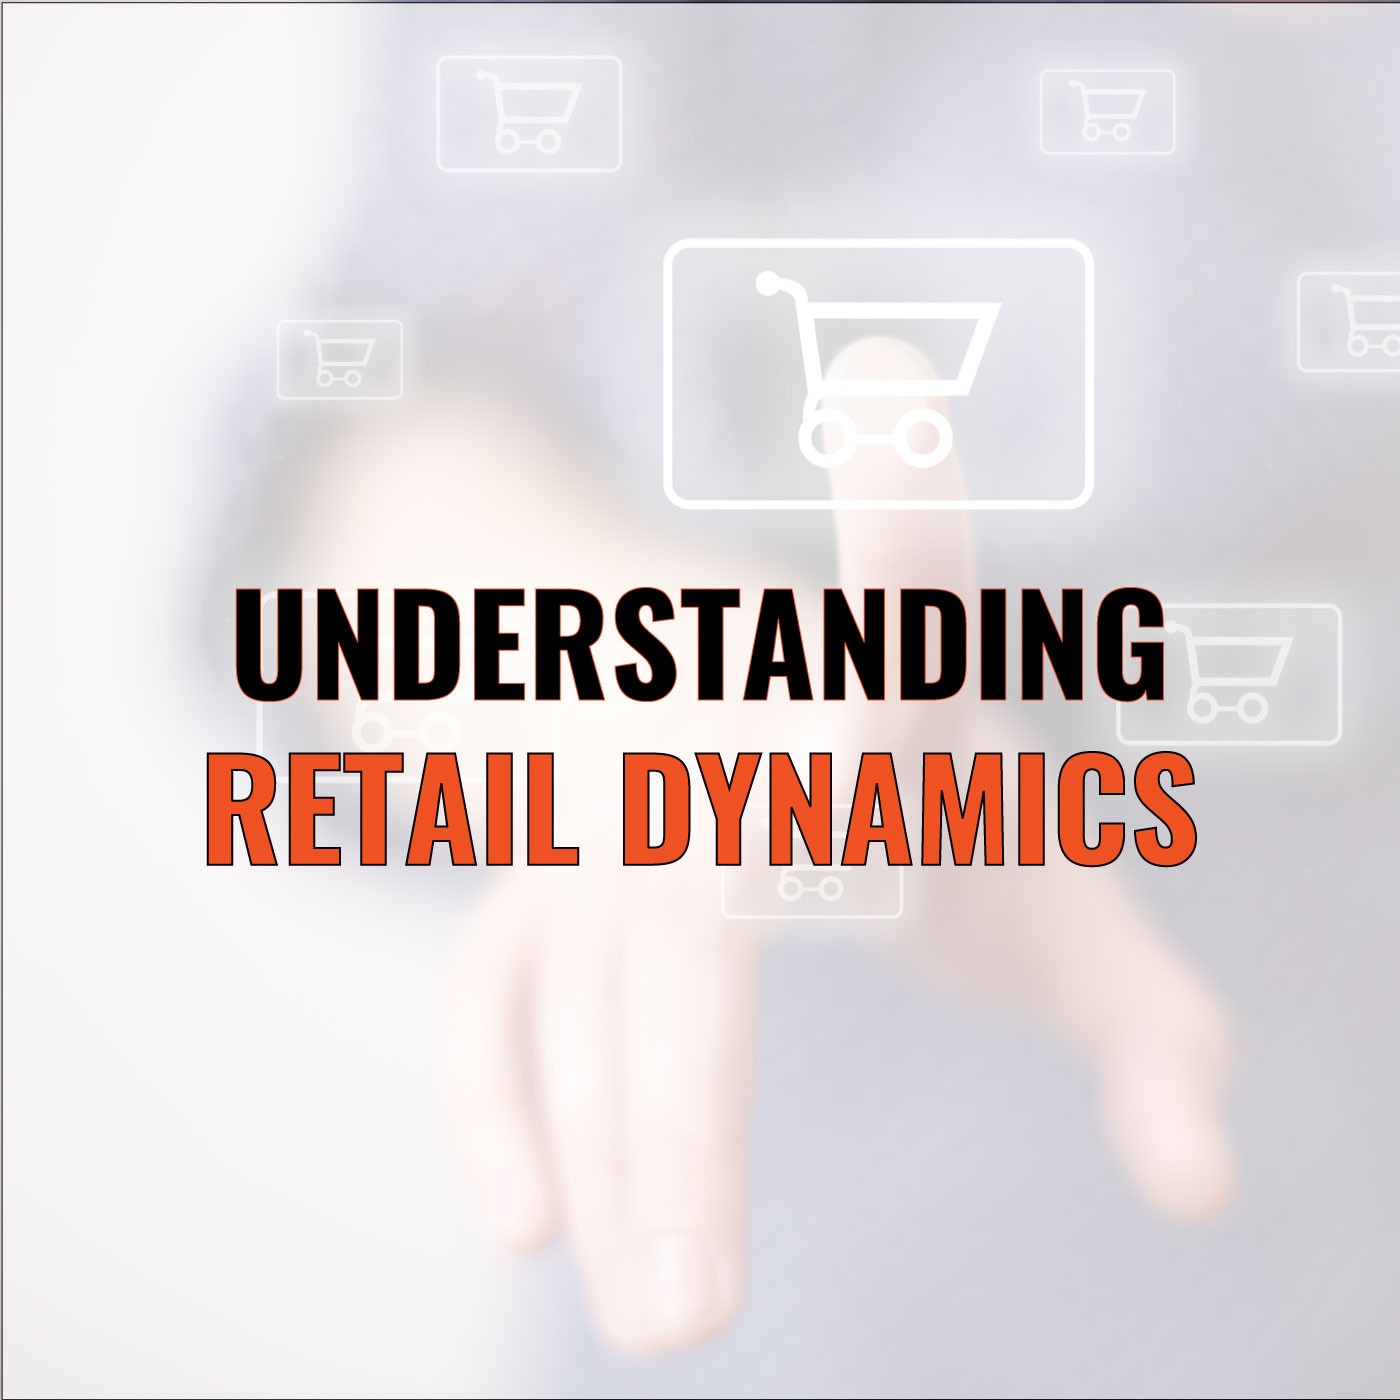 Episode 64: Michael Dart on Understanding Retail Dynamics